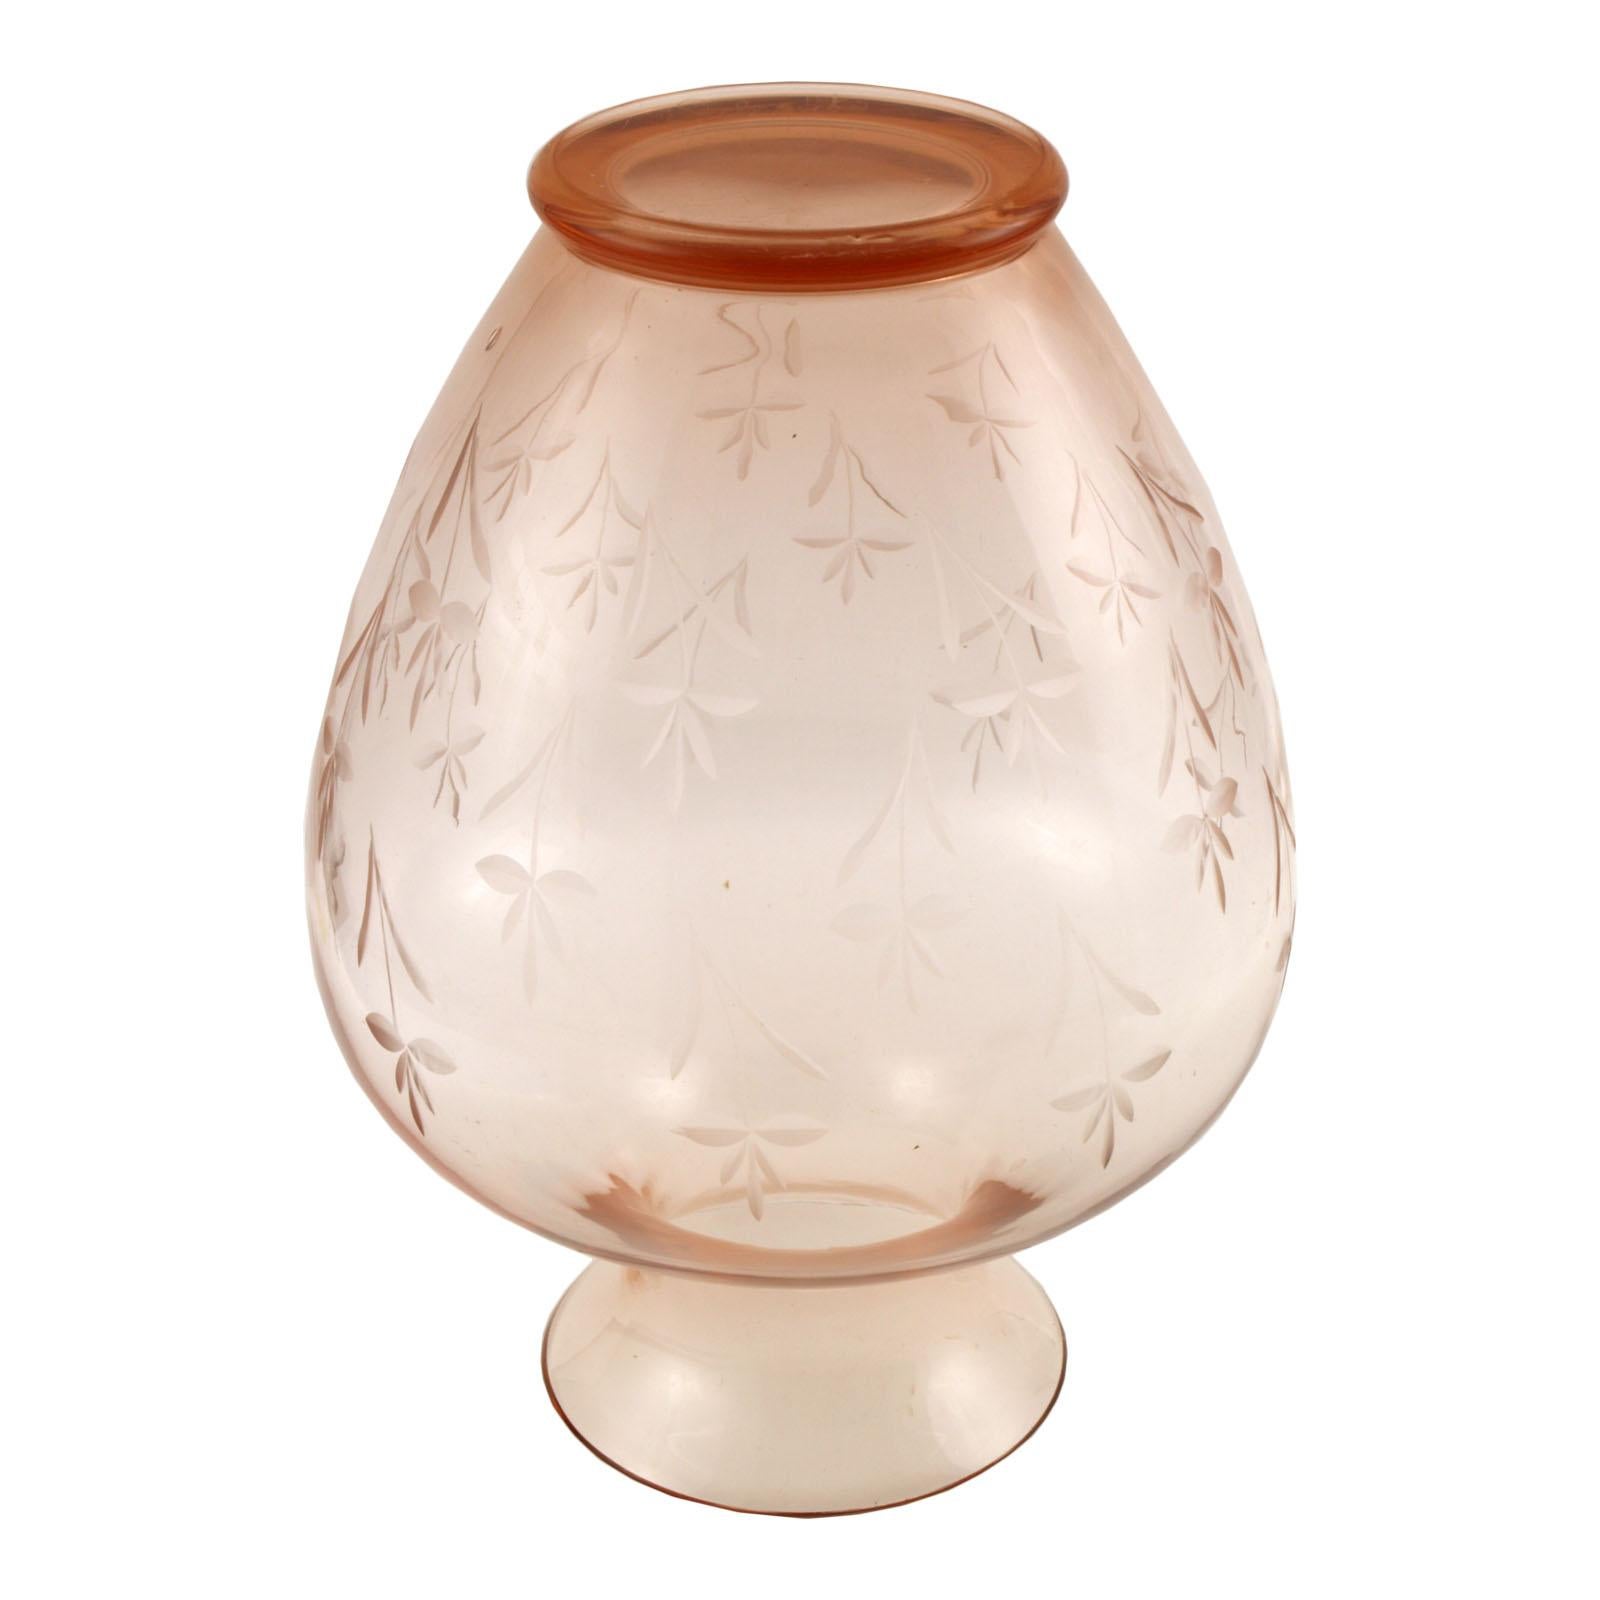 Italian Art Nouveau Large Amphora Vase, Salviati Murano, Amber, Etched Floral Motifs For Sale